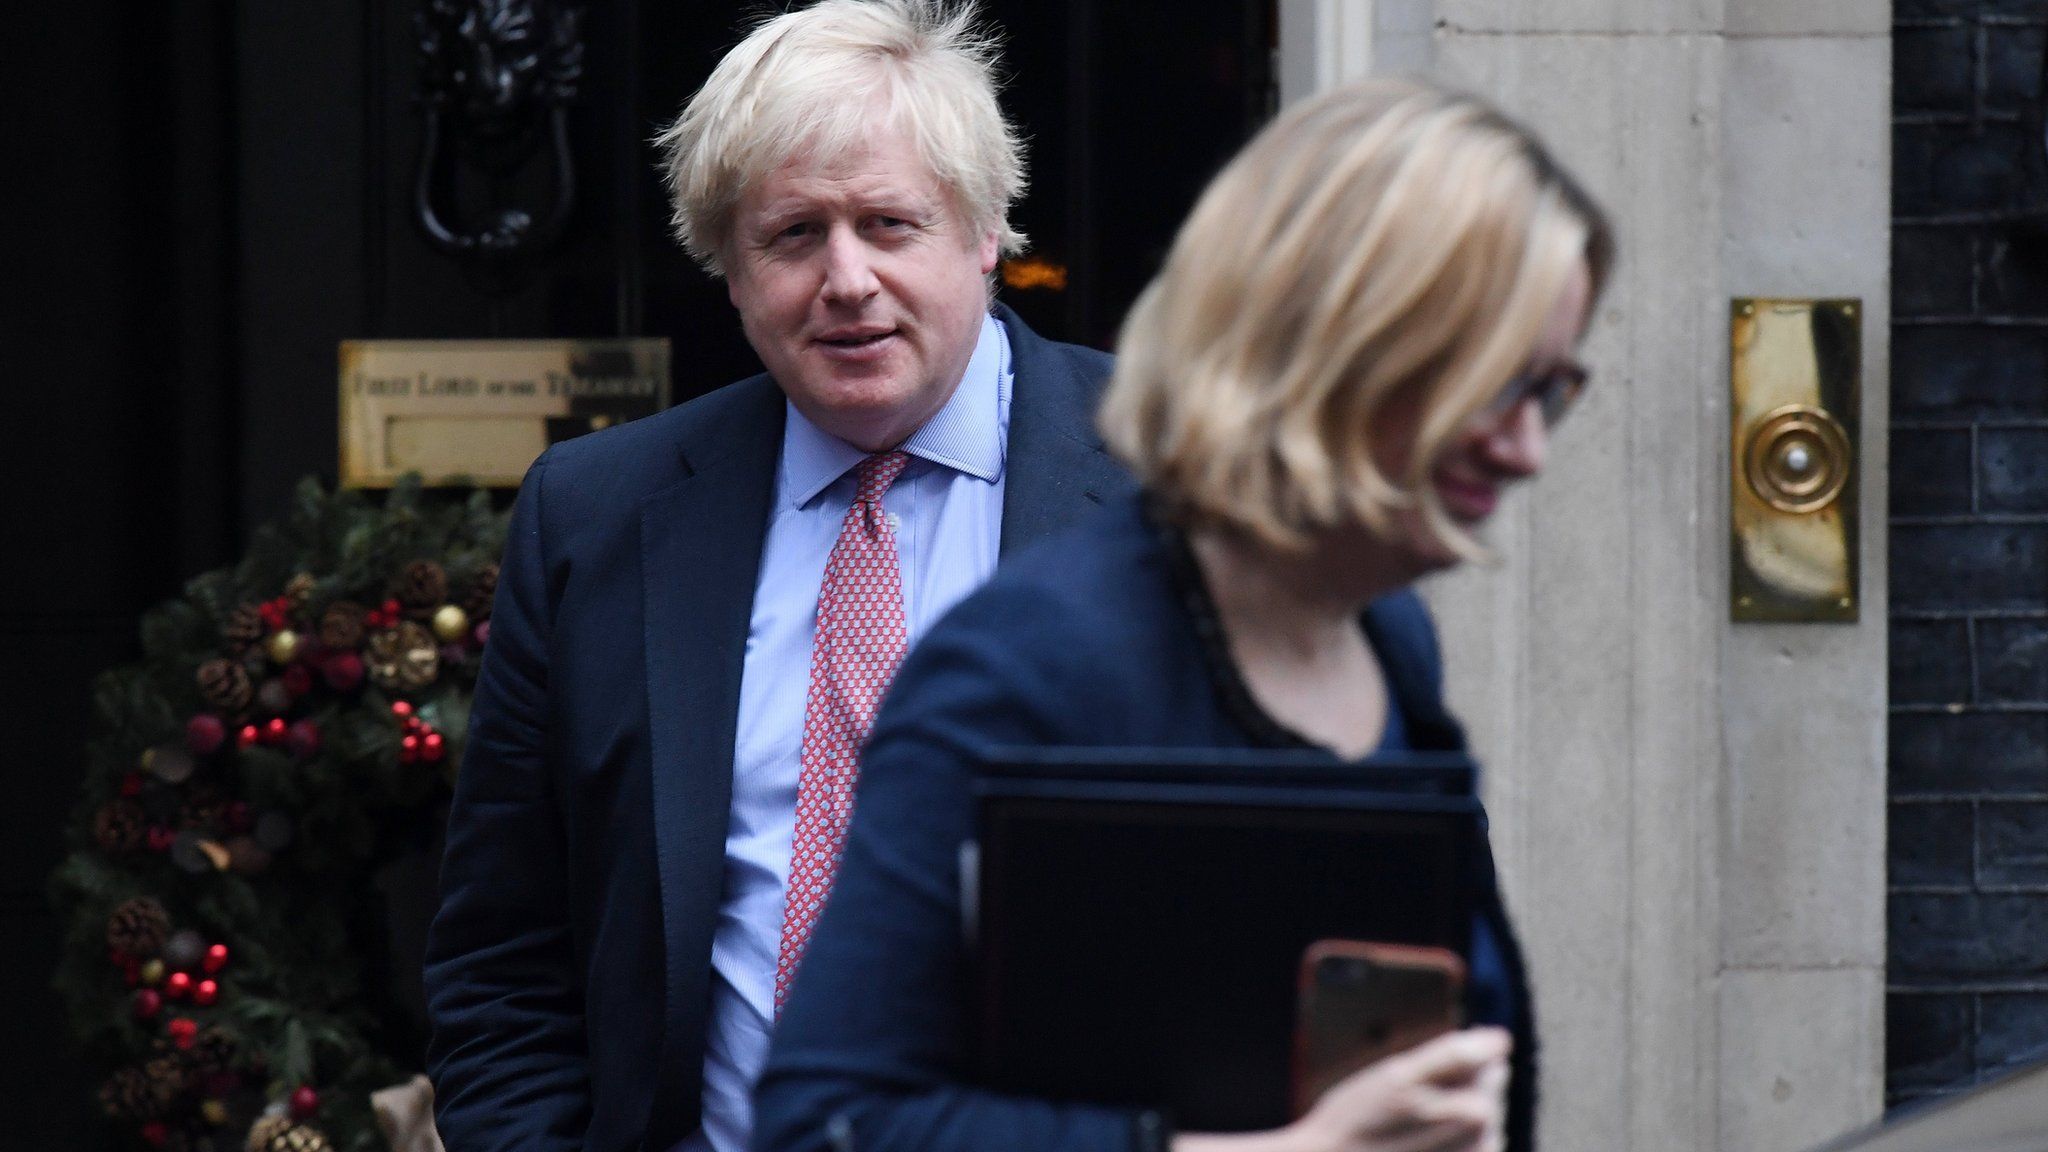 Boris Johnson and Amber Rudd